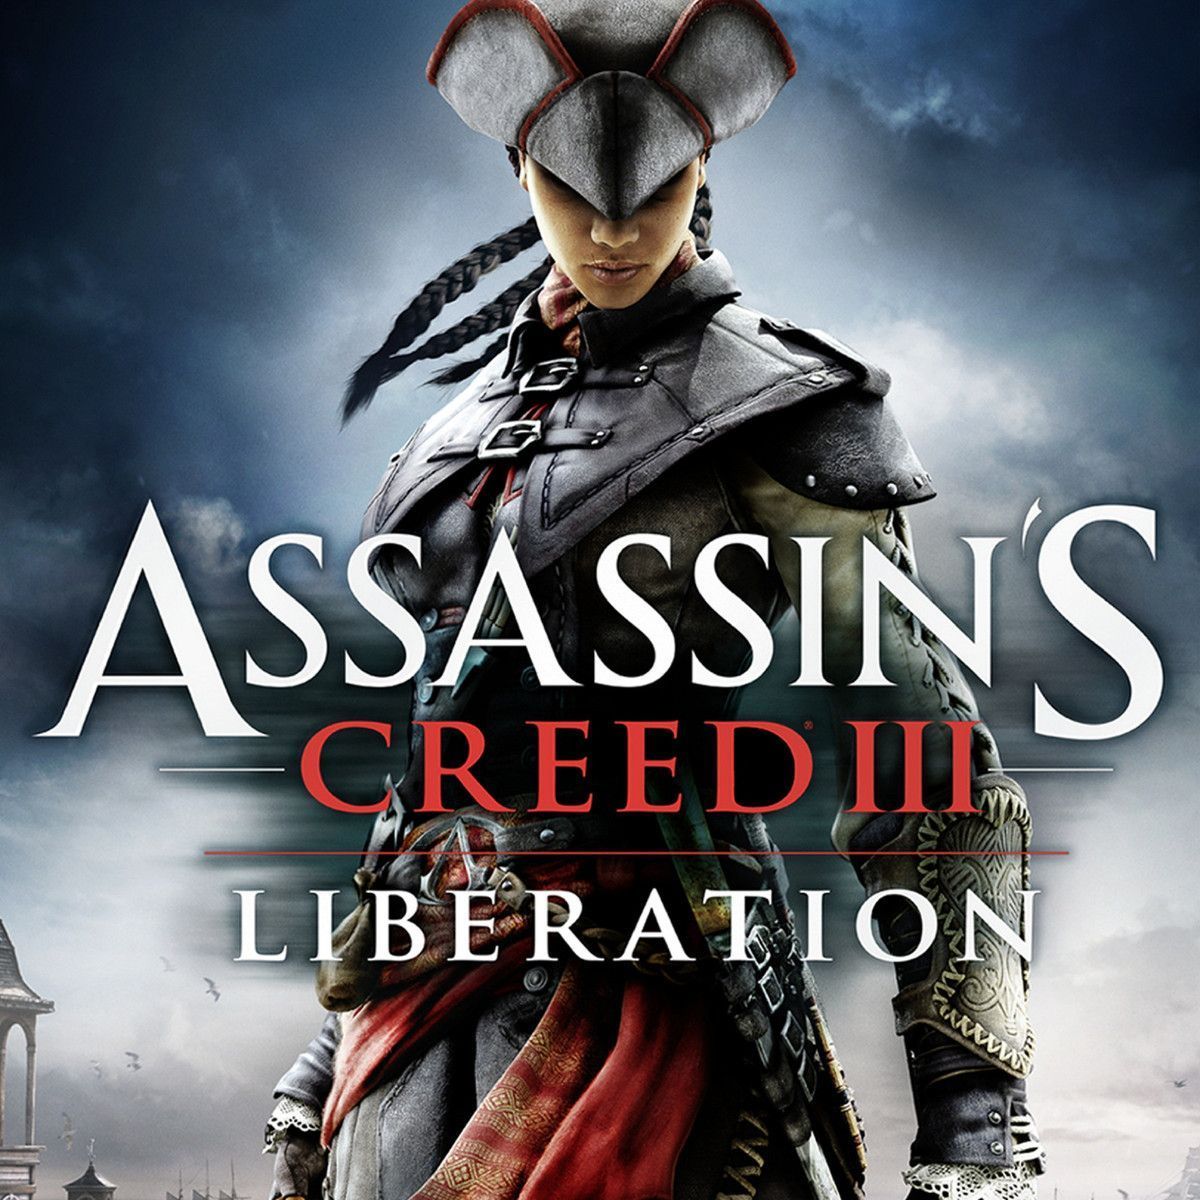 Assassin's Creed III: Liberation soundtrack. Assassin's Creed